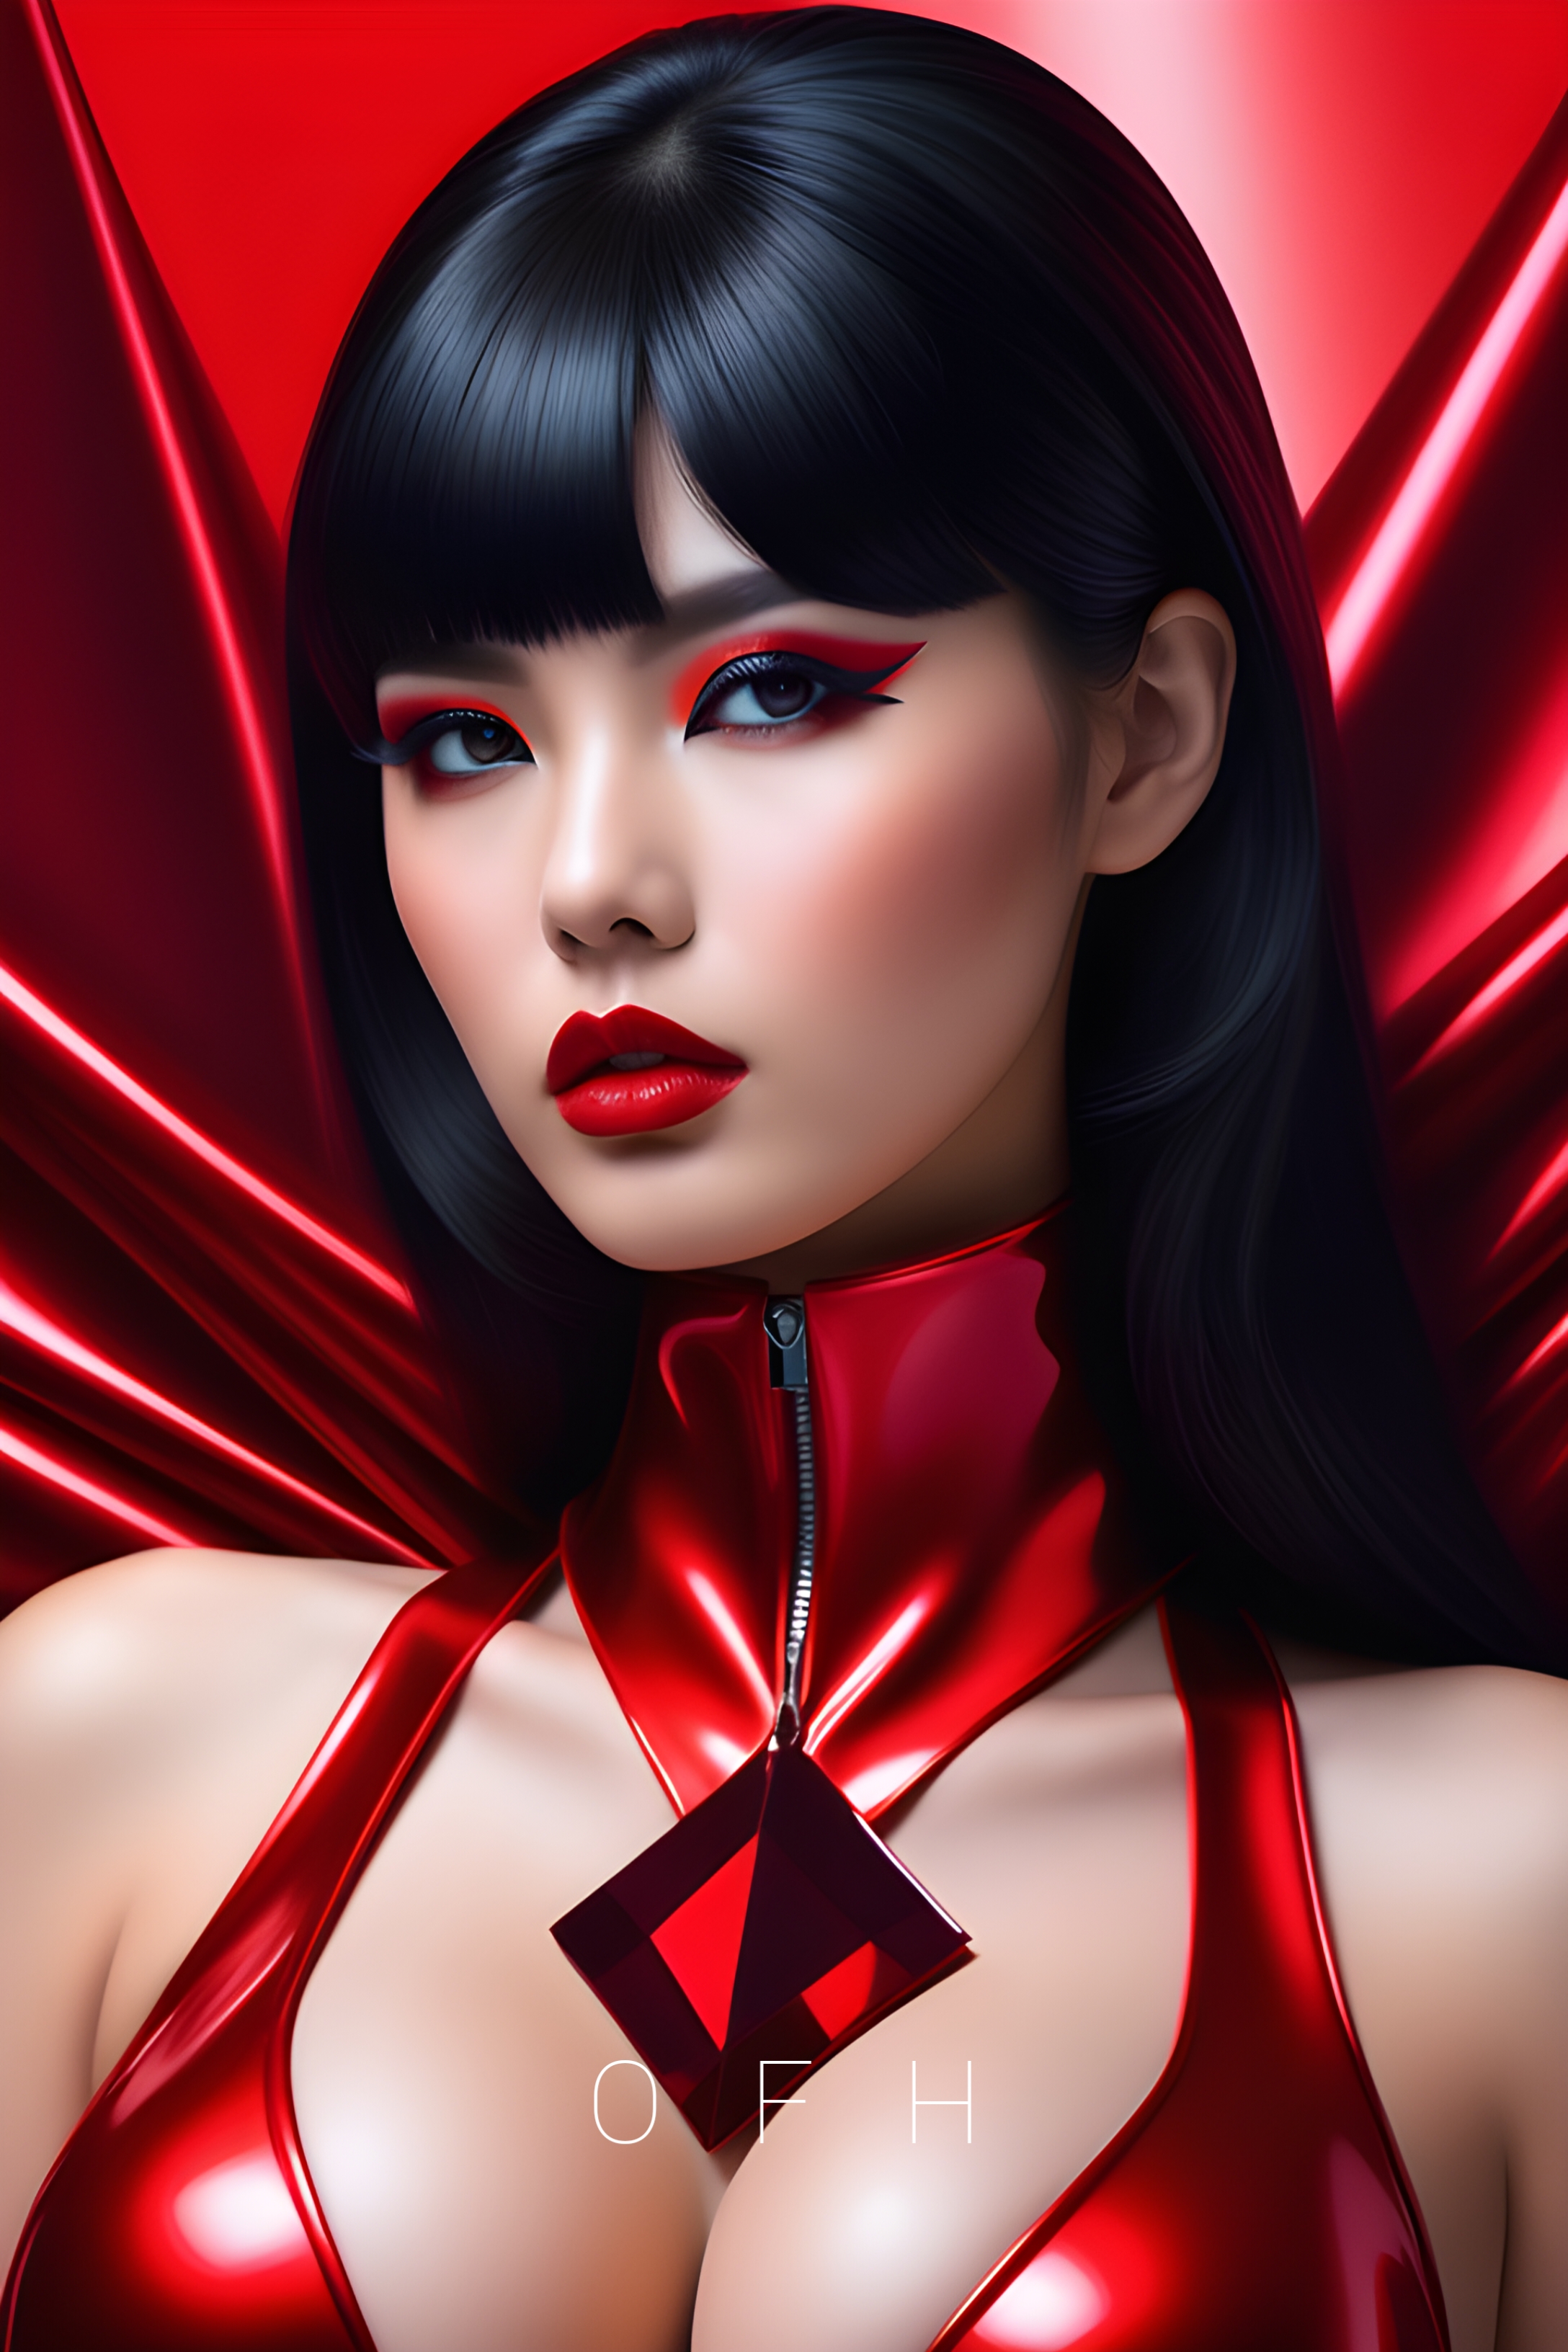 General 2176x3264 AI art OneFinalHug latex digital art red lipstick cosplay looking at viewer Asian women portrait display cleavage big boobs parted lips lipstick makeup eyeshadow